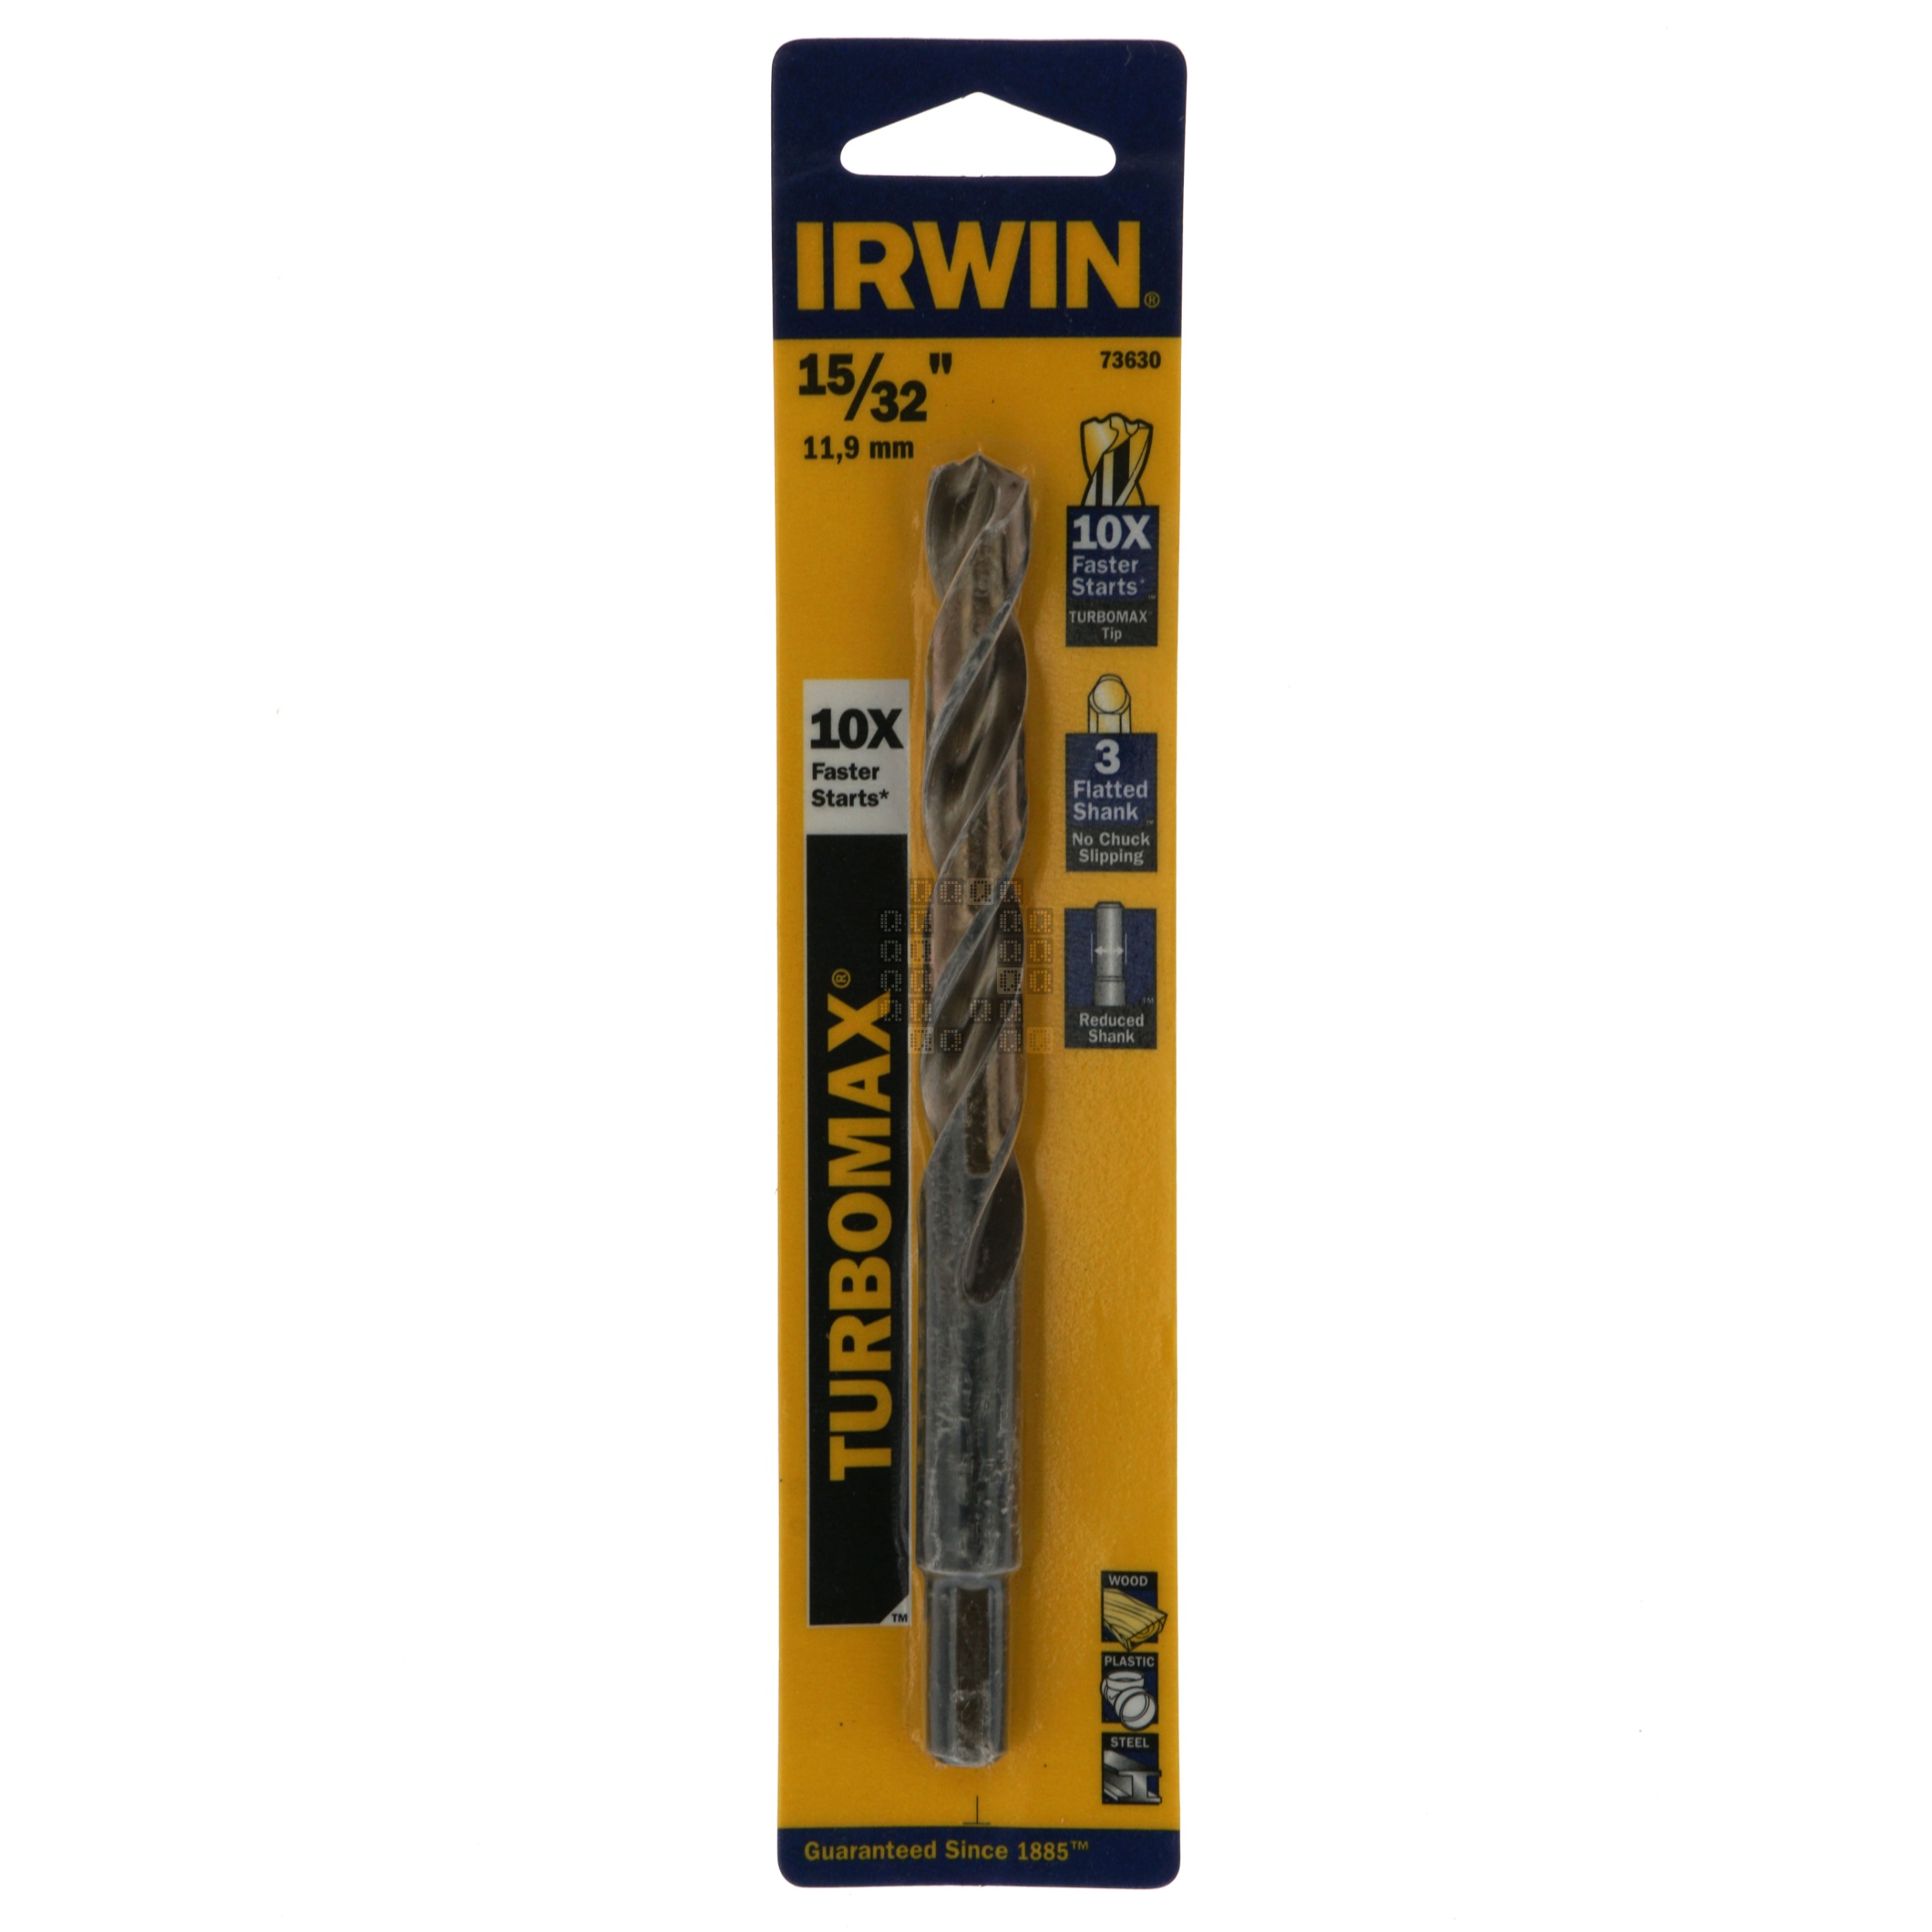 Irwin Industrial Tools 73630 15/32" TURBOMAX Jobber Drill Bit, 3/8" Reduced Shank with Flats